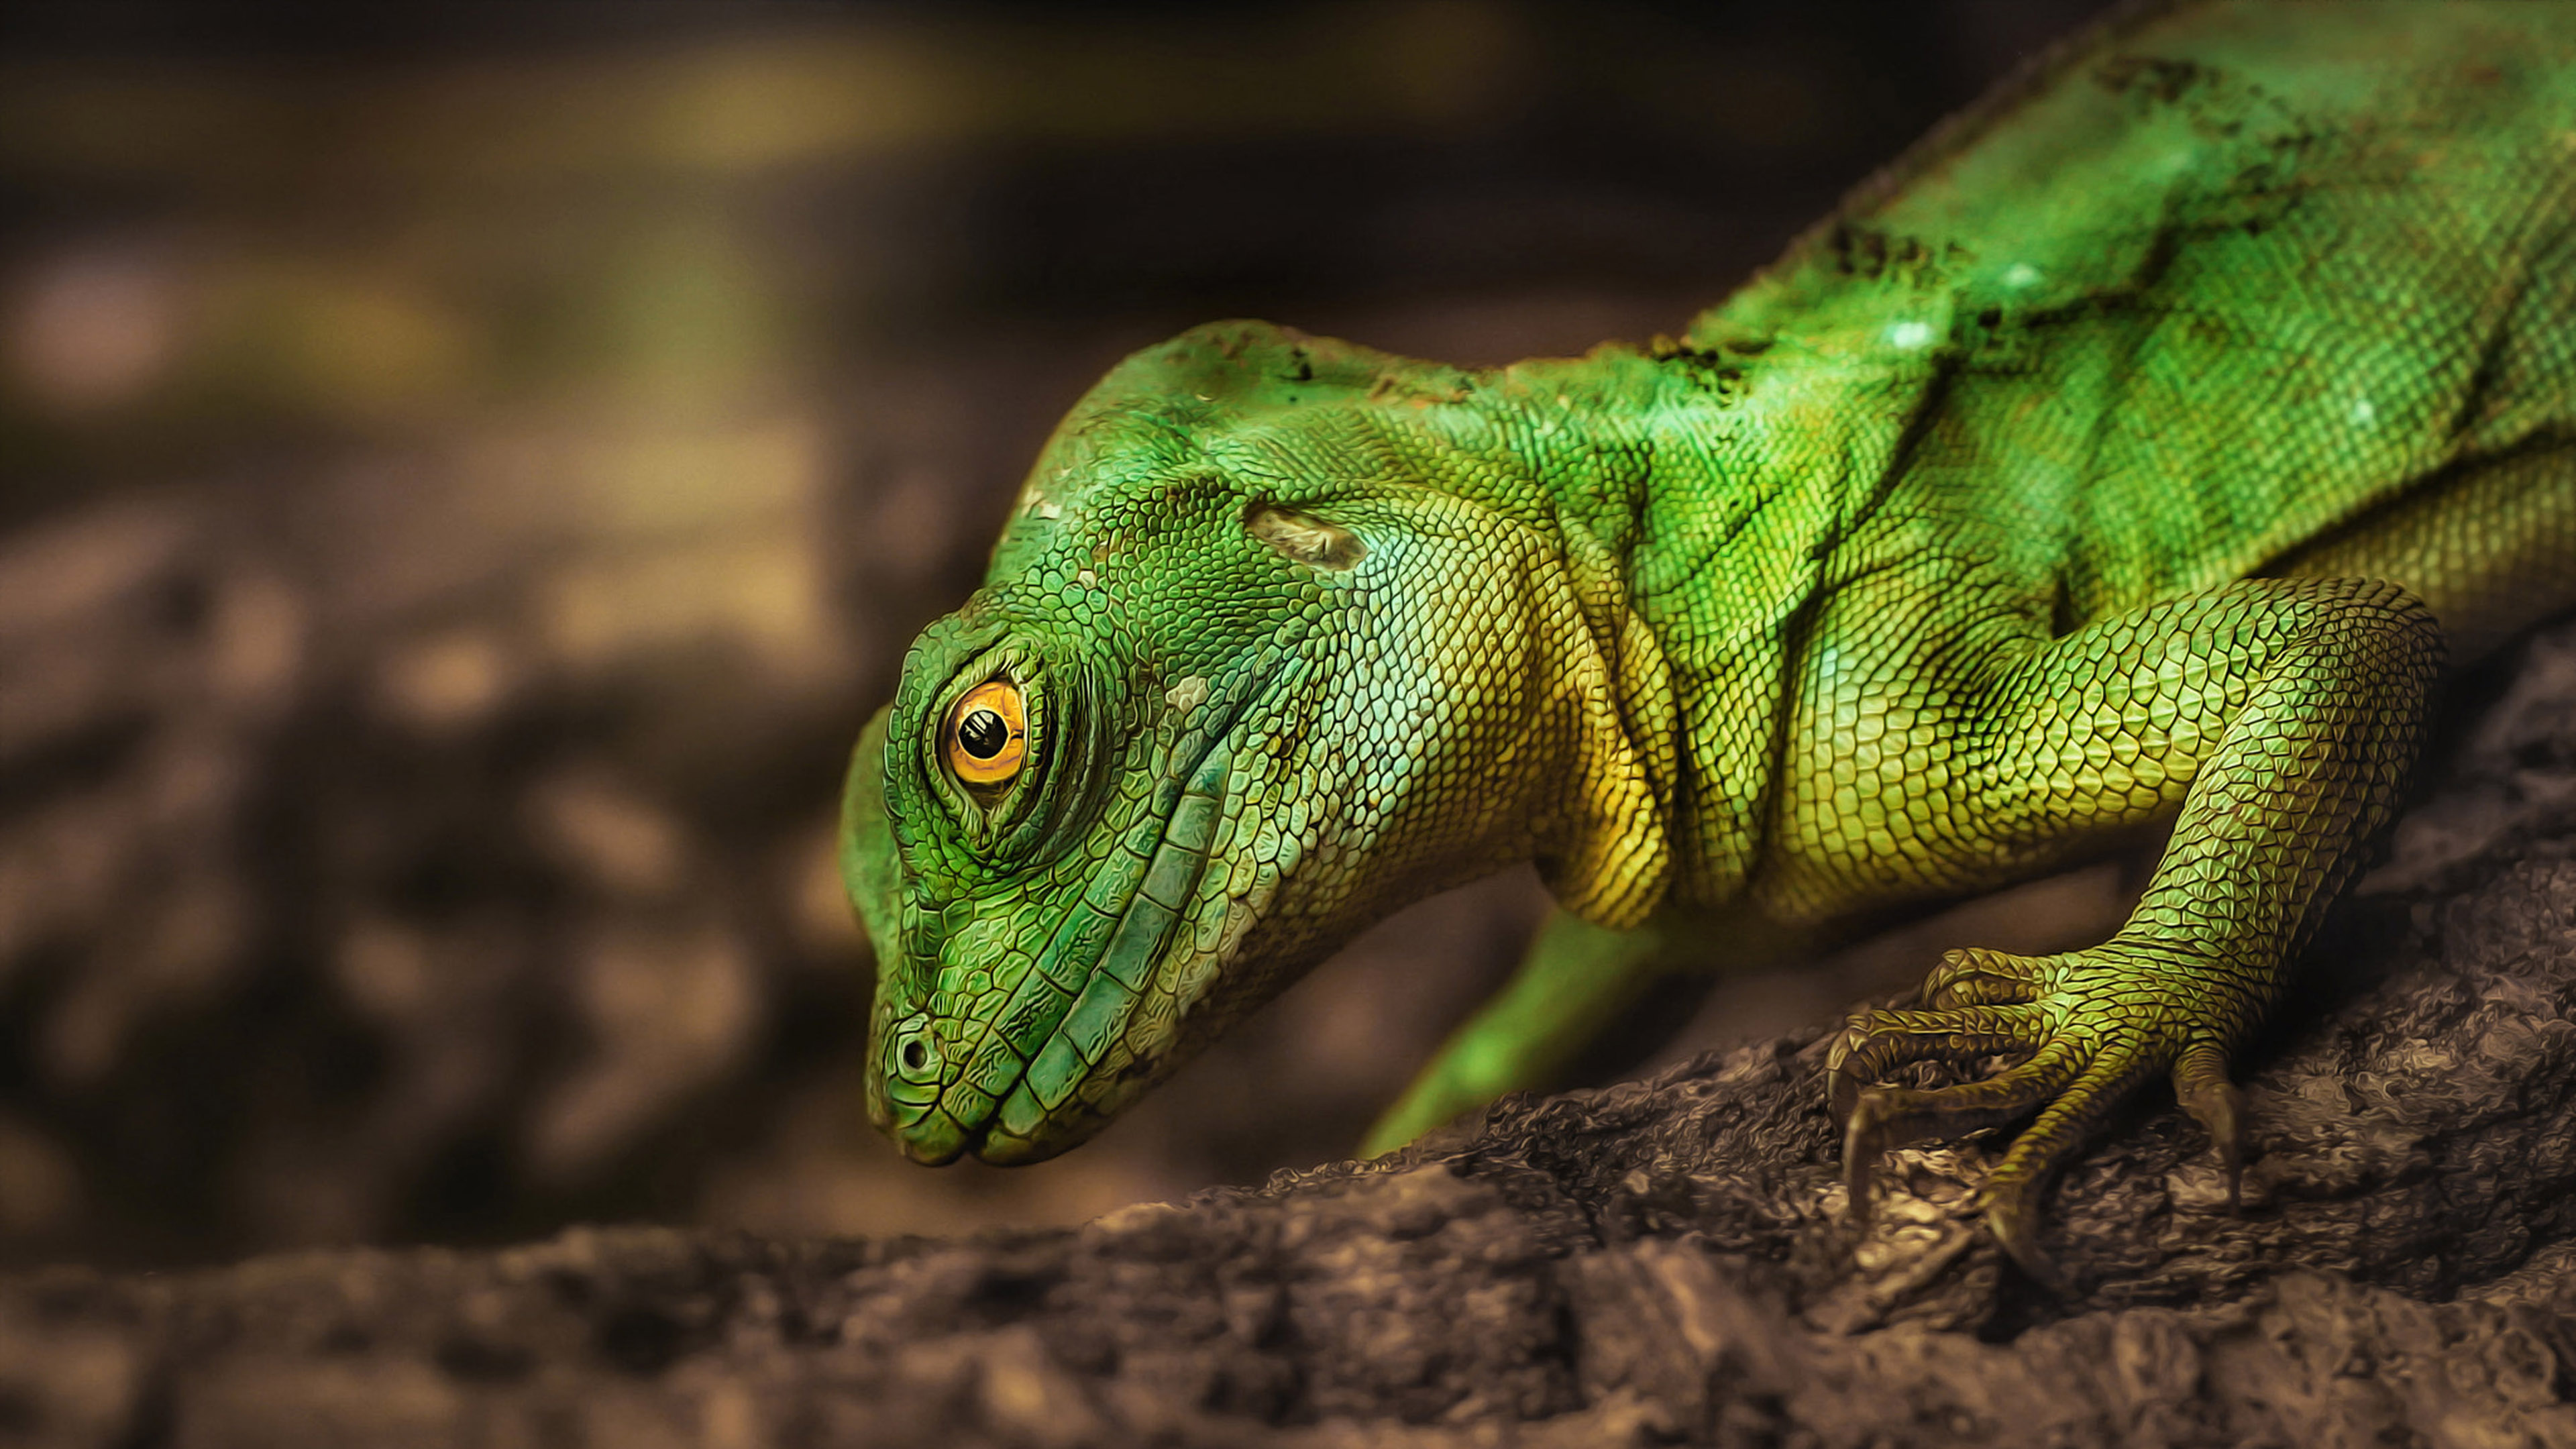  Reptile  Green Iguana  Anxious Looking Lizard From Game 